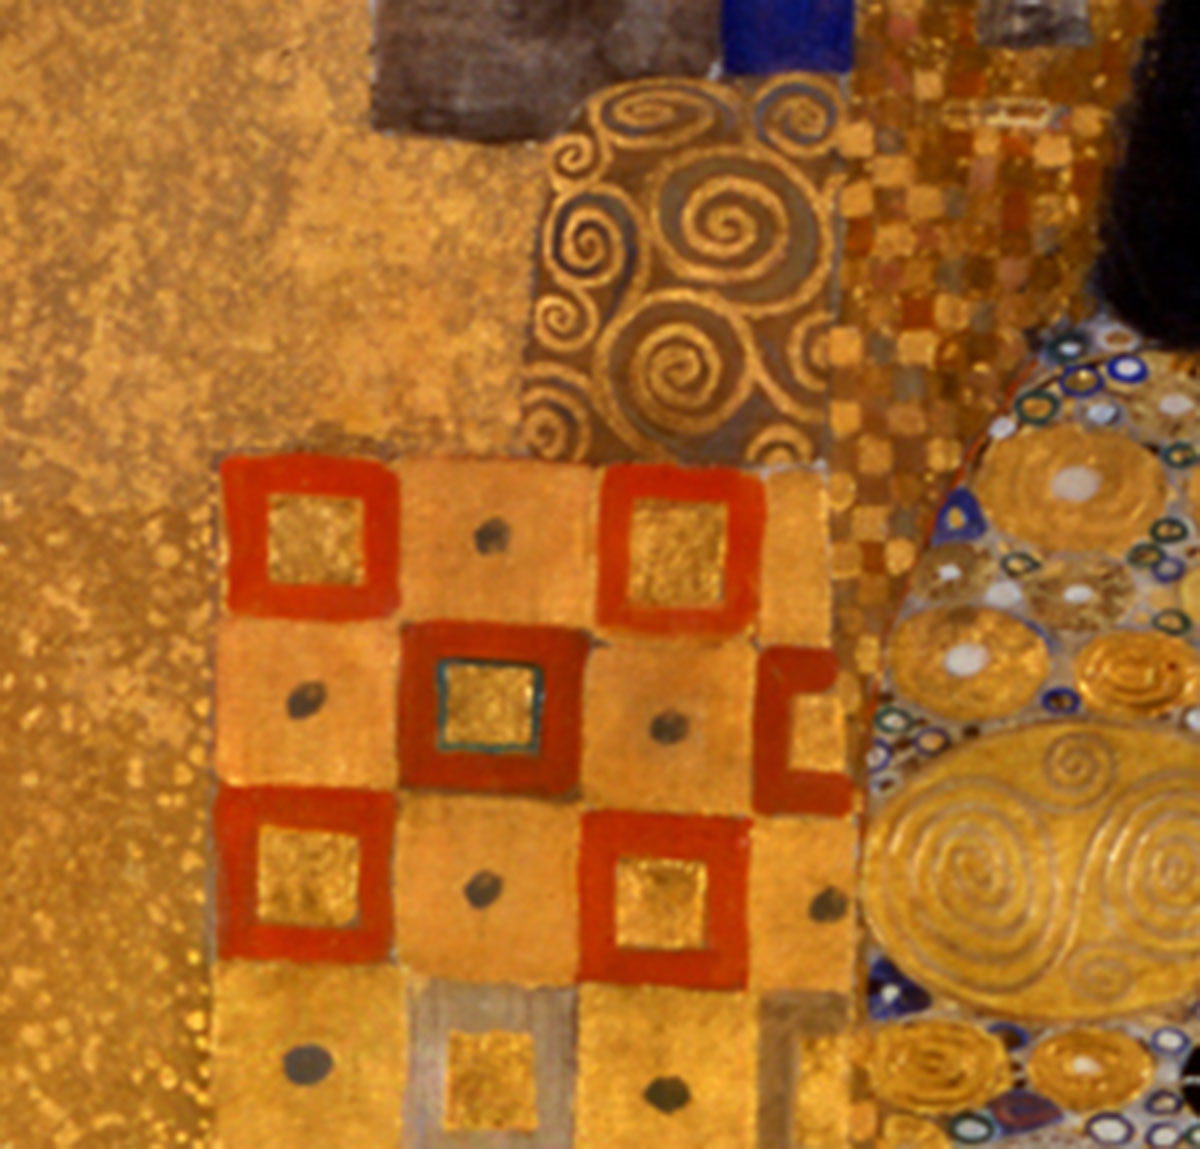 Chân dung Adele Bloch-Bauer I’ của Gustav Klimt